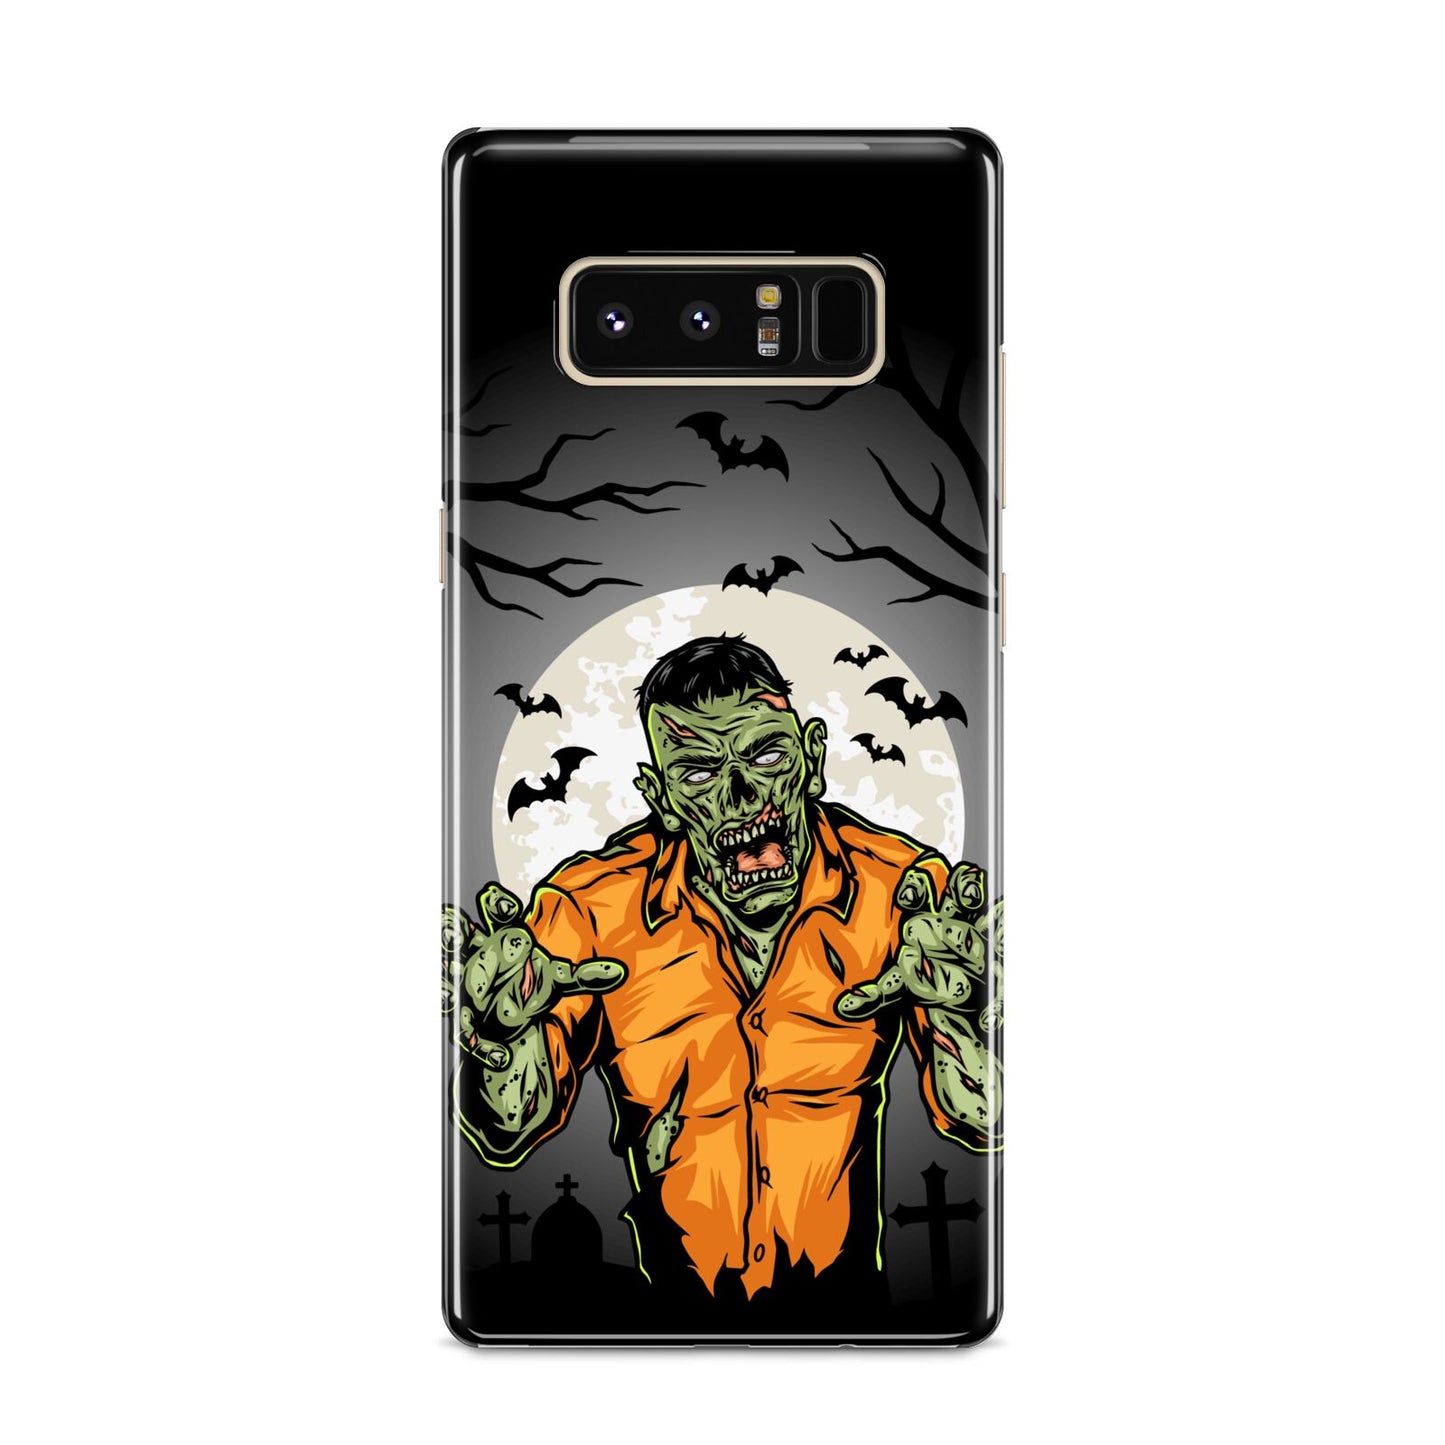 Zombie Night Samsung Galaxy S8 Case